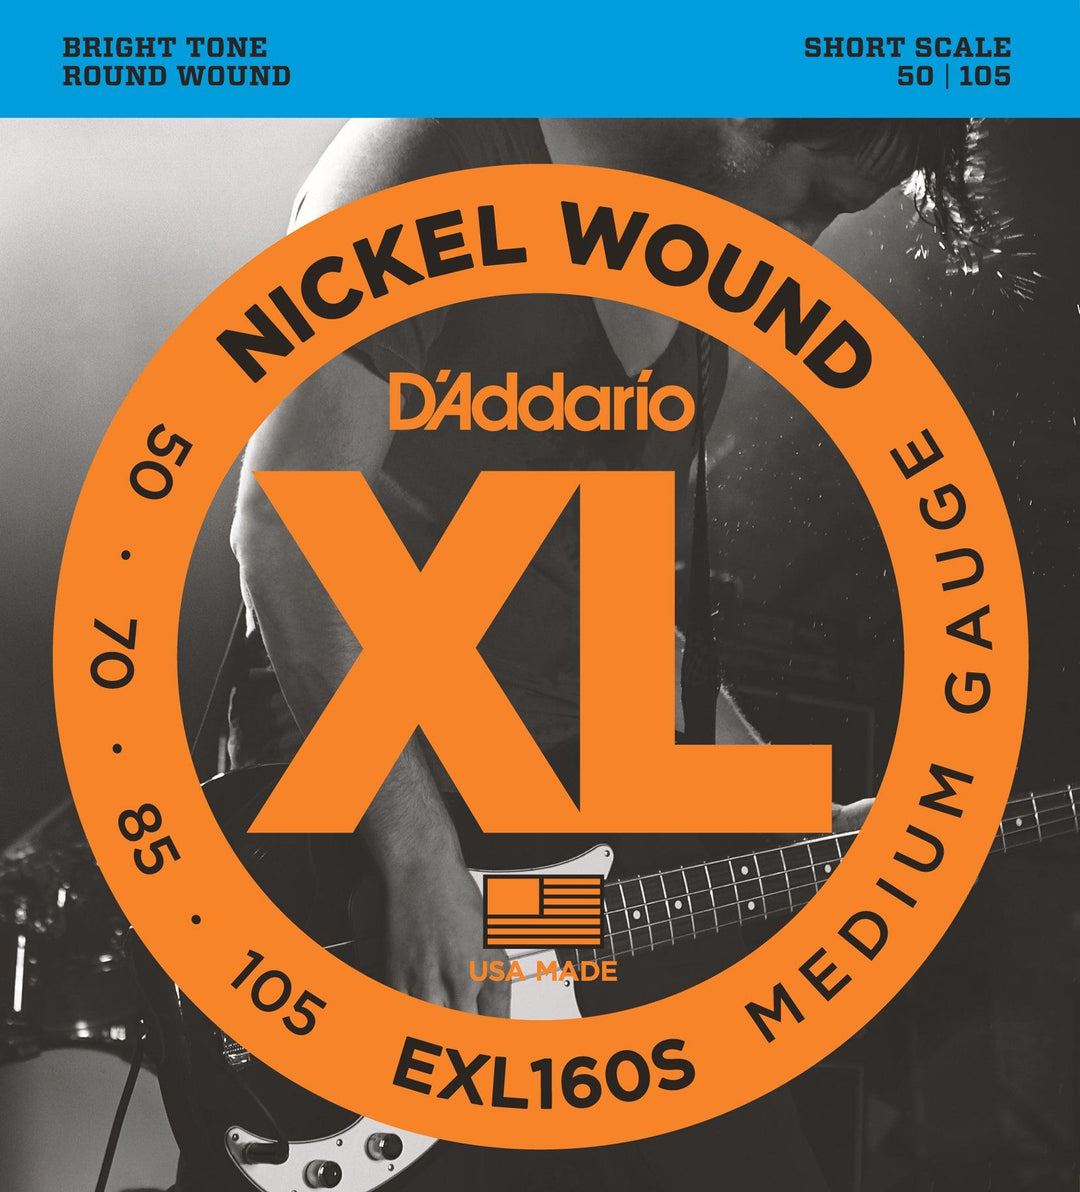 D'Addario XL Bass Guitar String Set, Nickel, EXL160S Medium .050-.105, Short Scale - A Strings